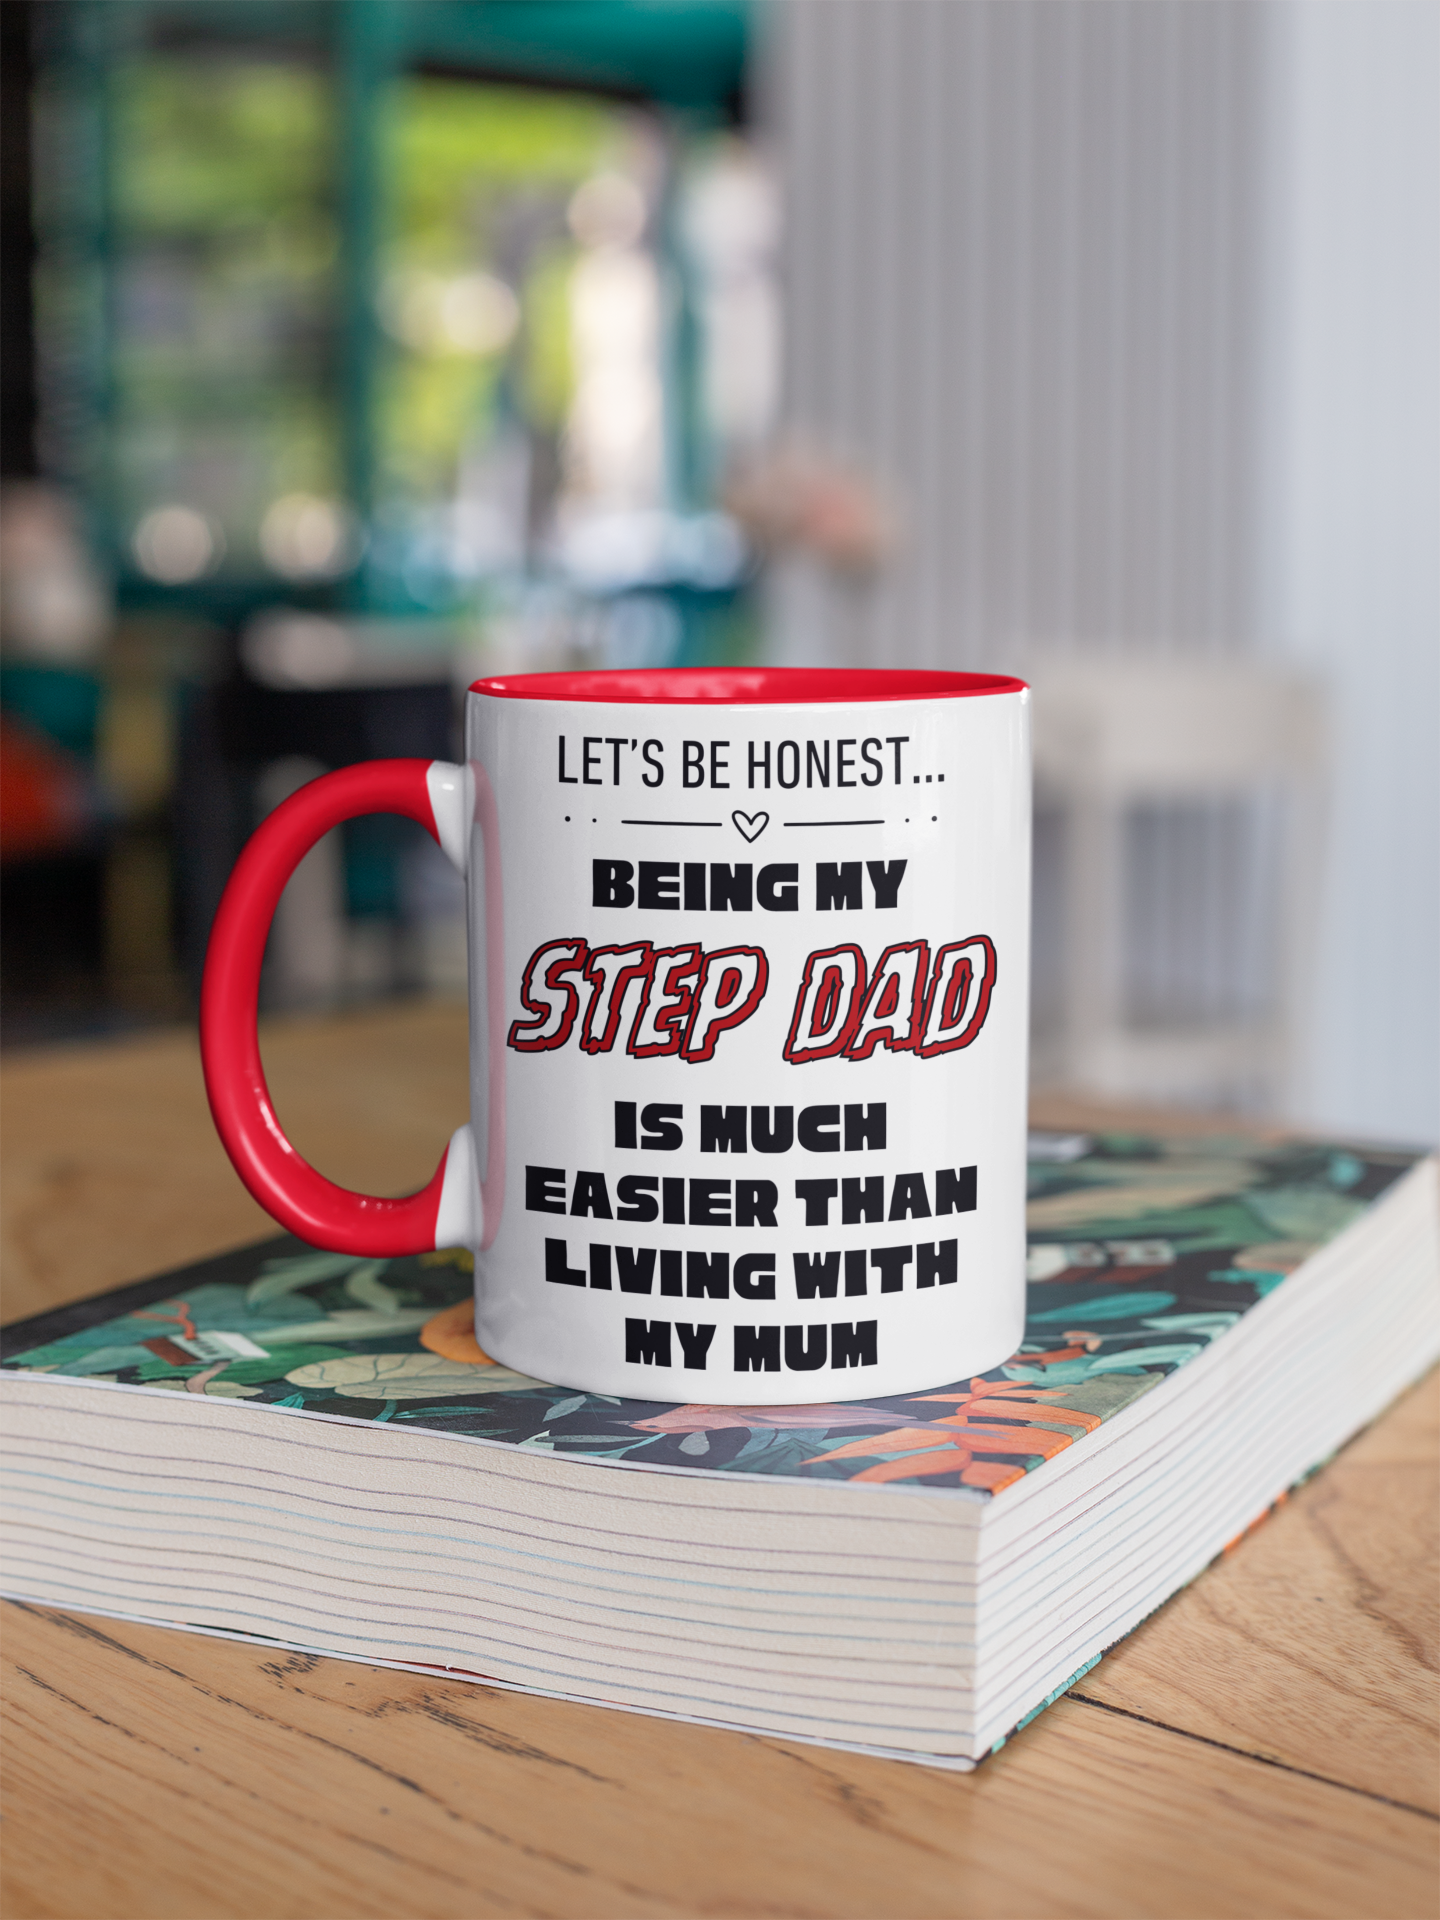 Step dad funny mug